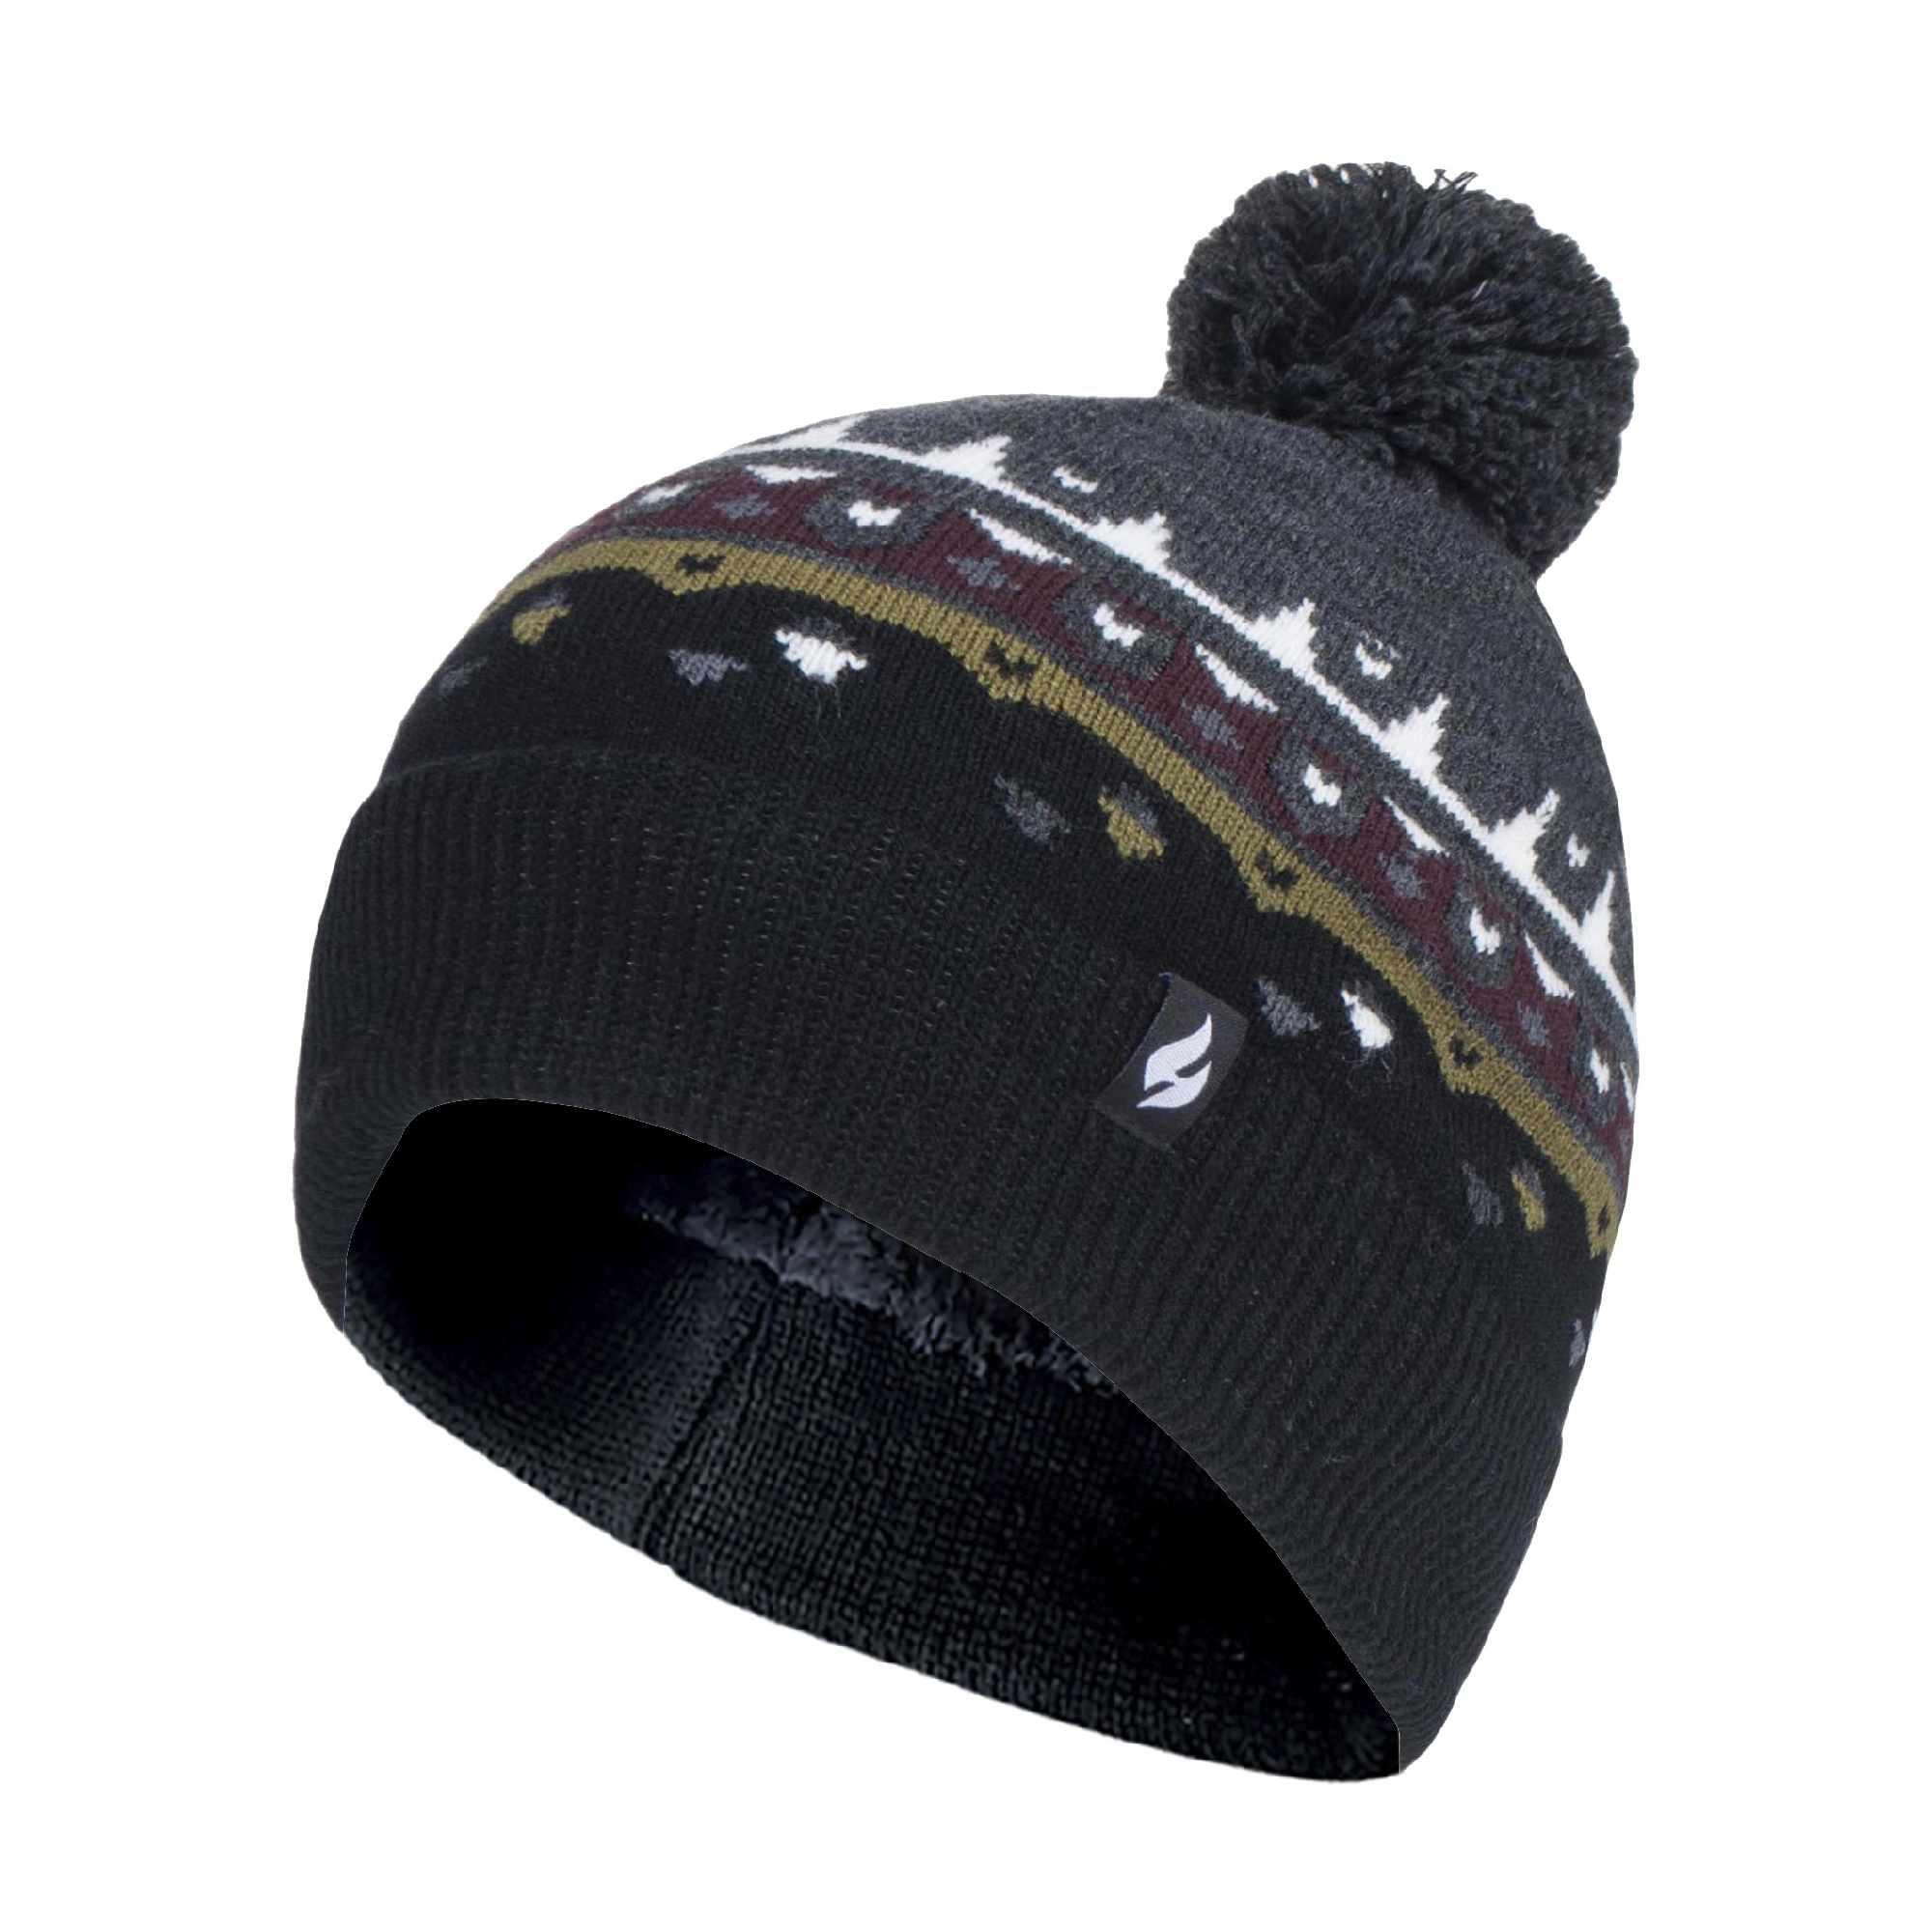 Mens Thin Knit Fleece Lined Pom Pom Hat | Patterned | For Winter 1/7